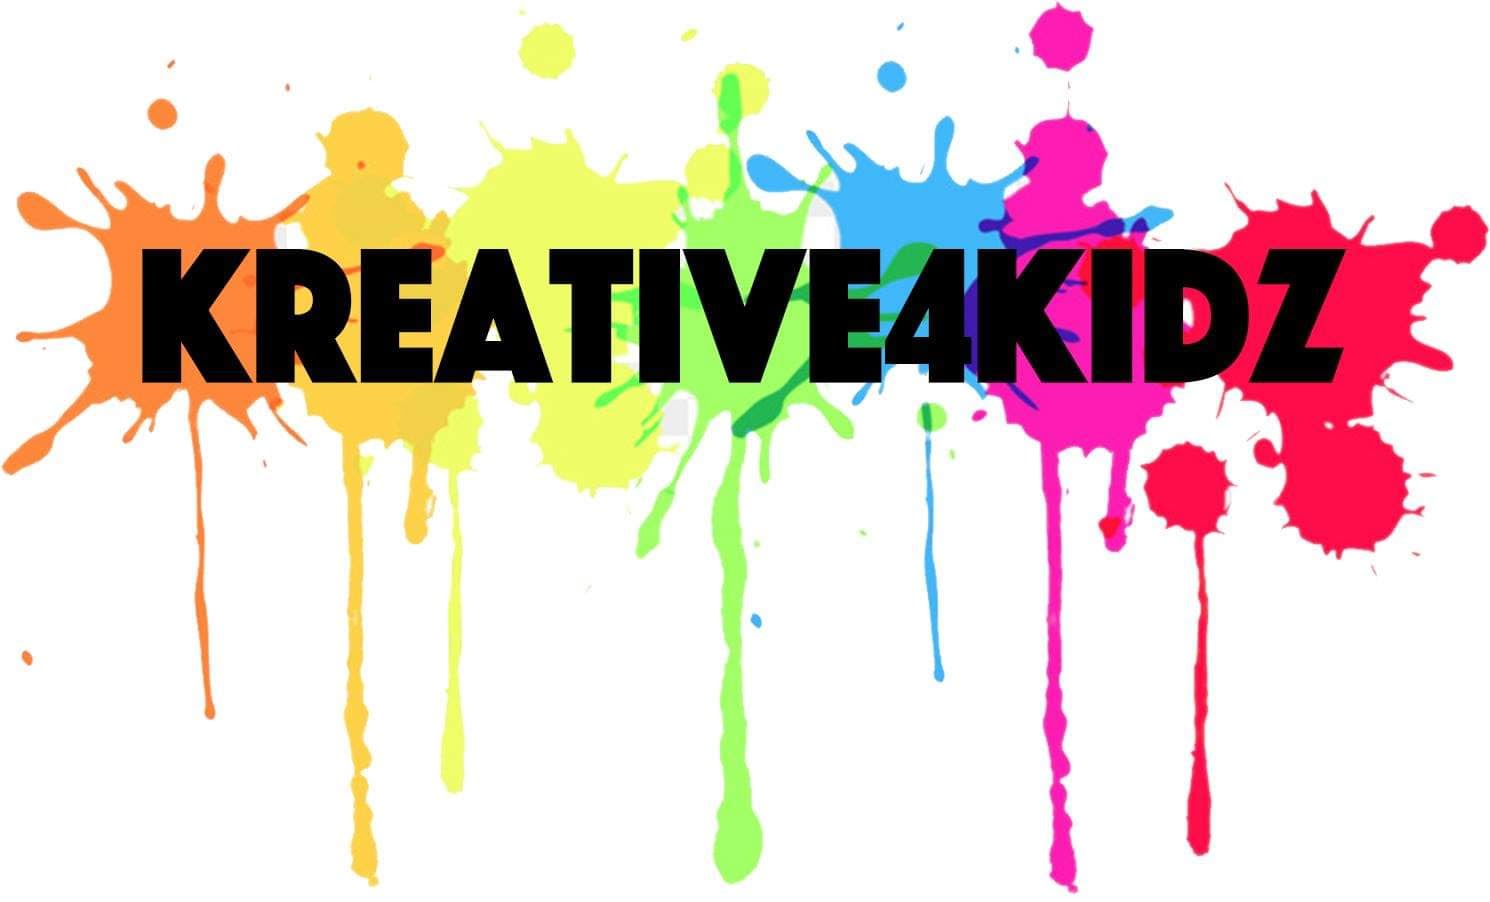 Kreative 4 Kidz Childcare